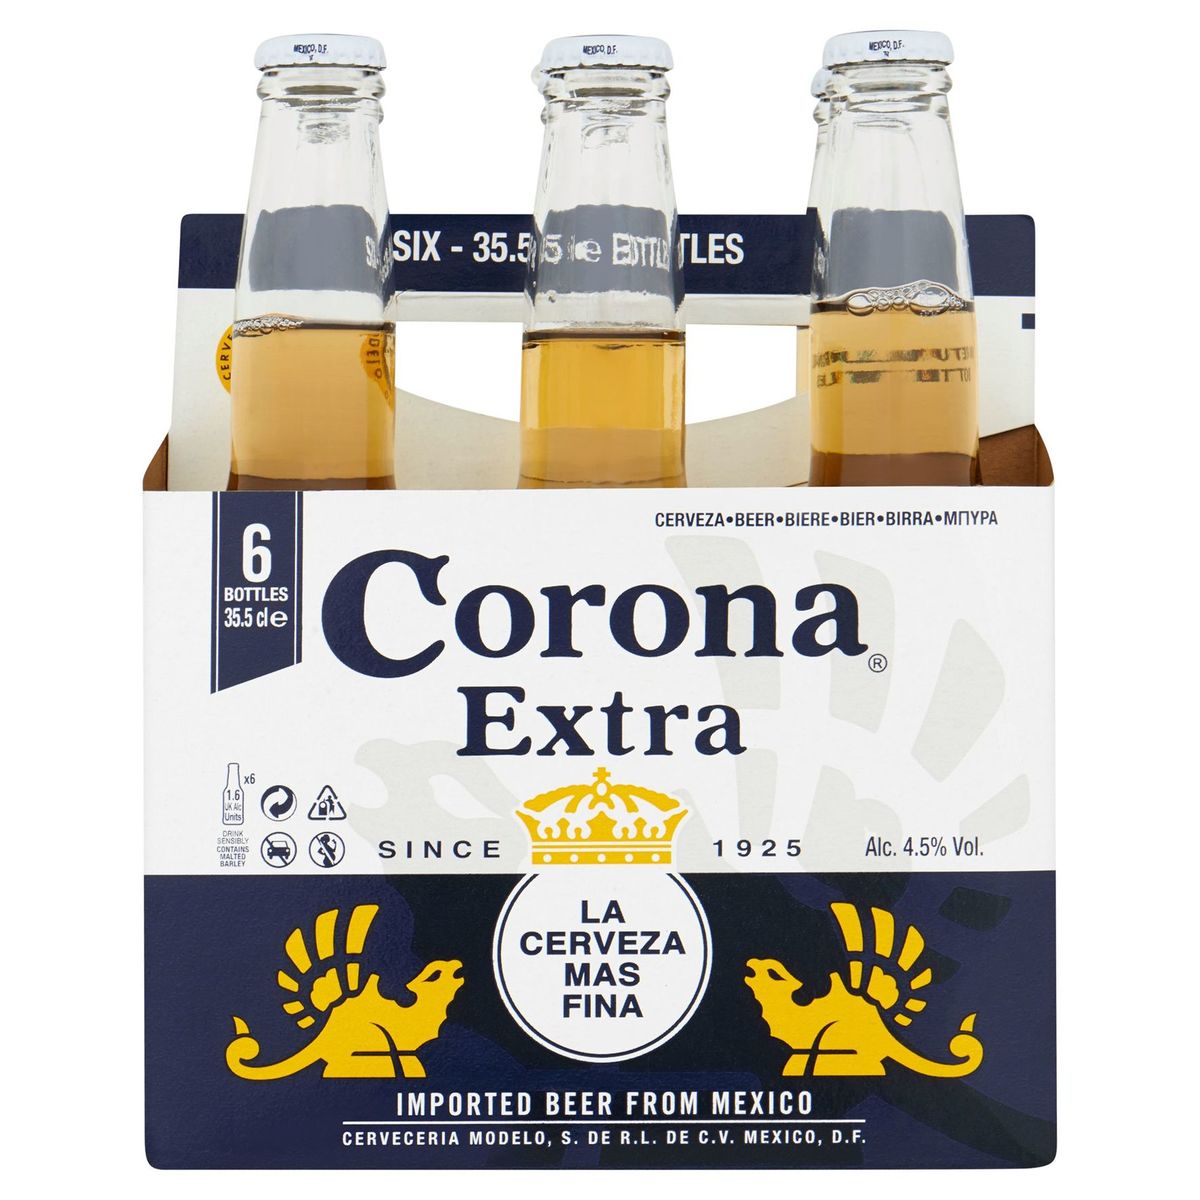 Corona Extra Bouteilles 6 x 35.5 cl